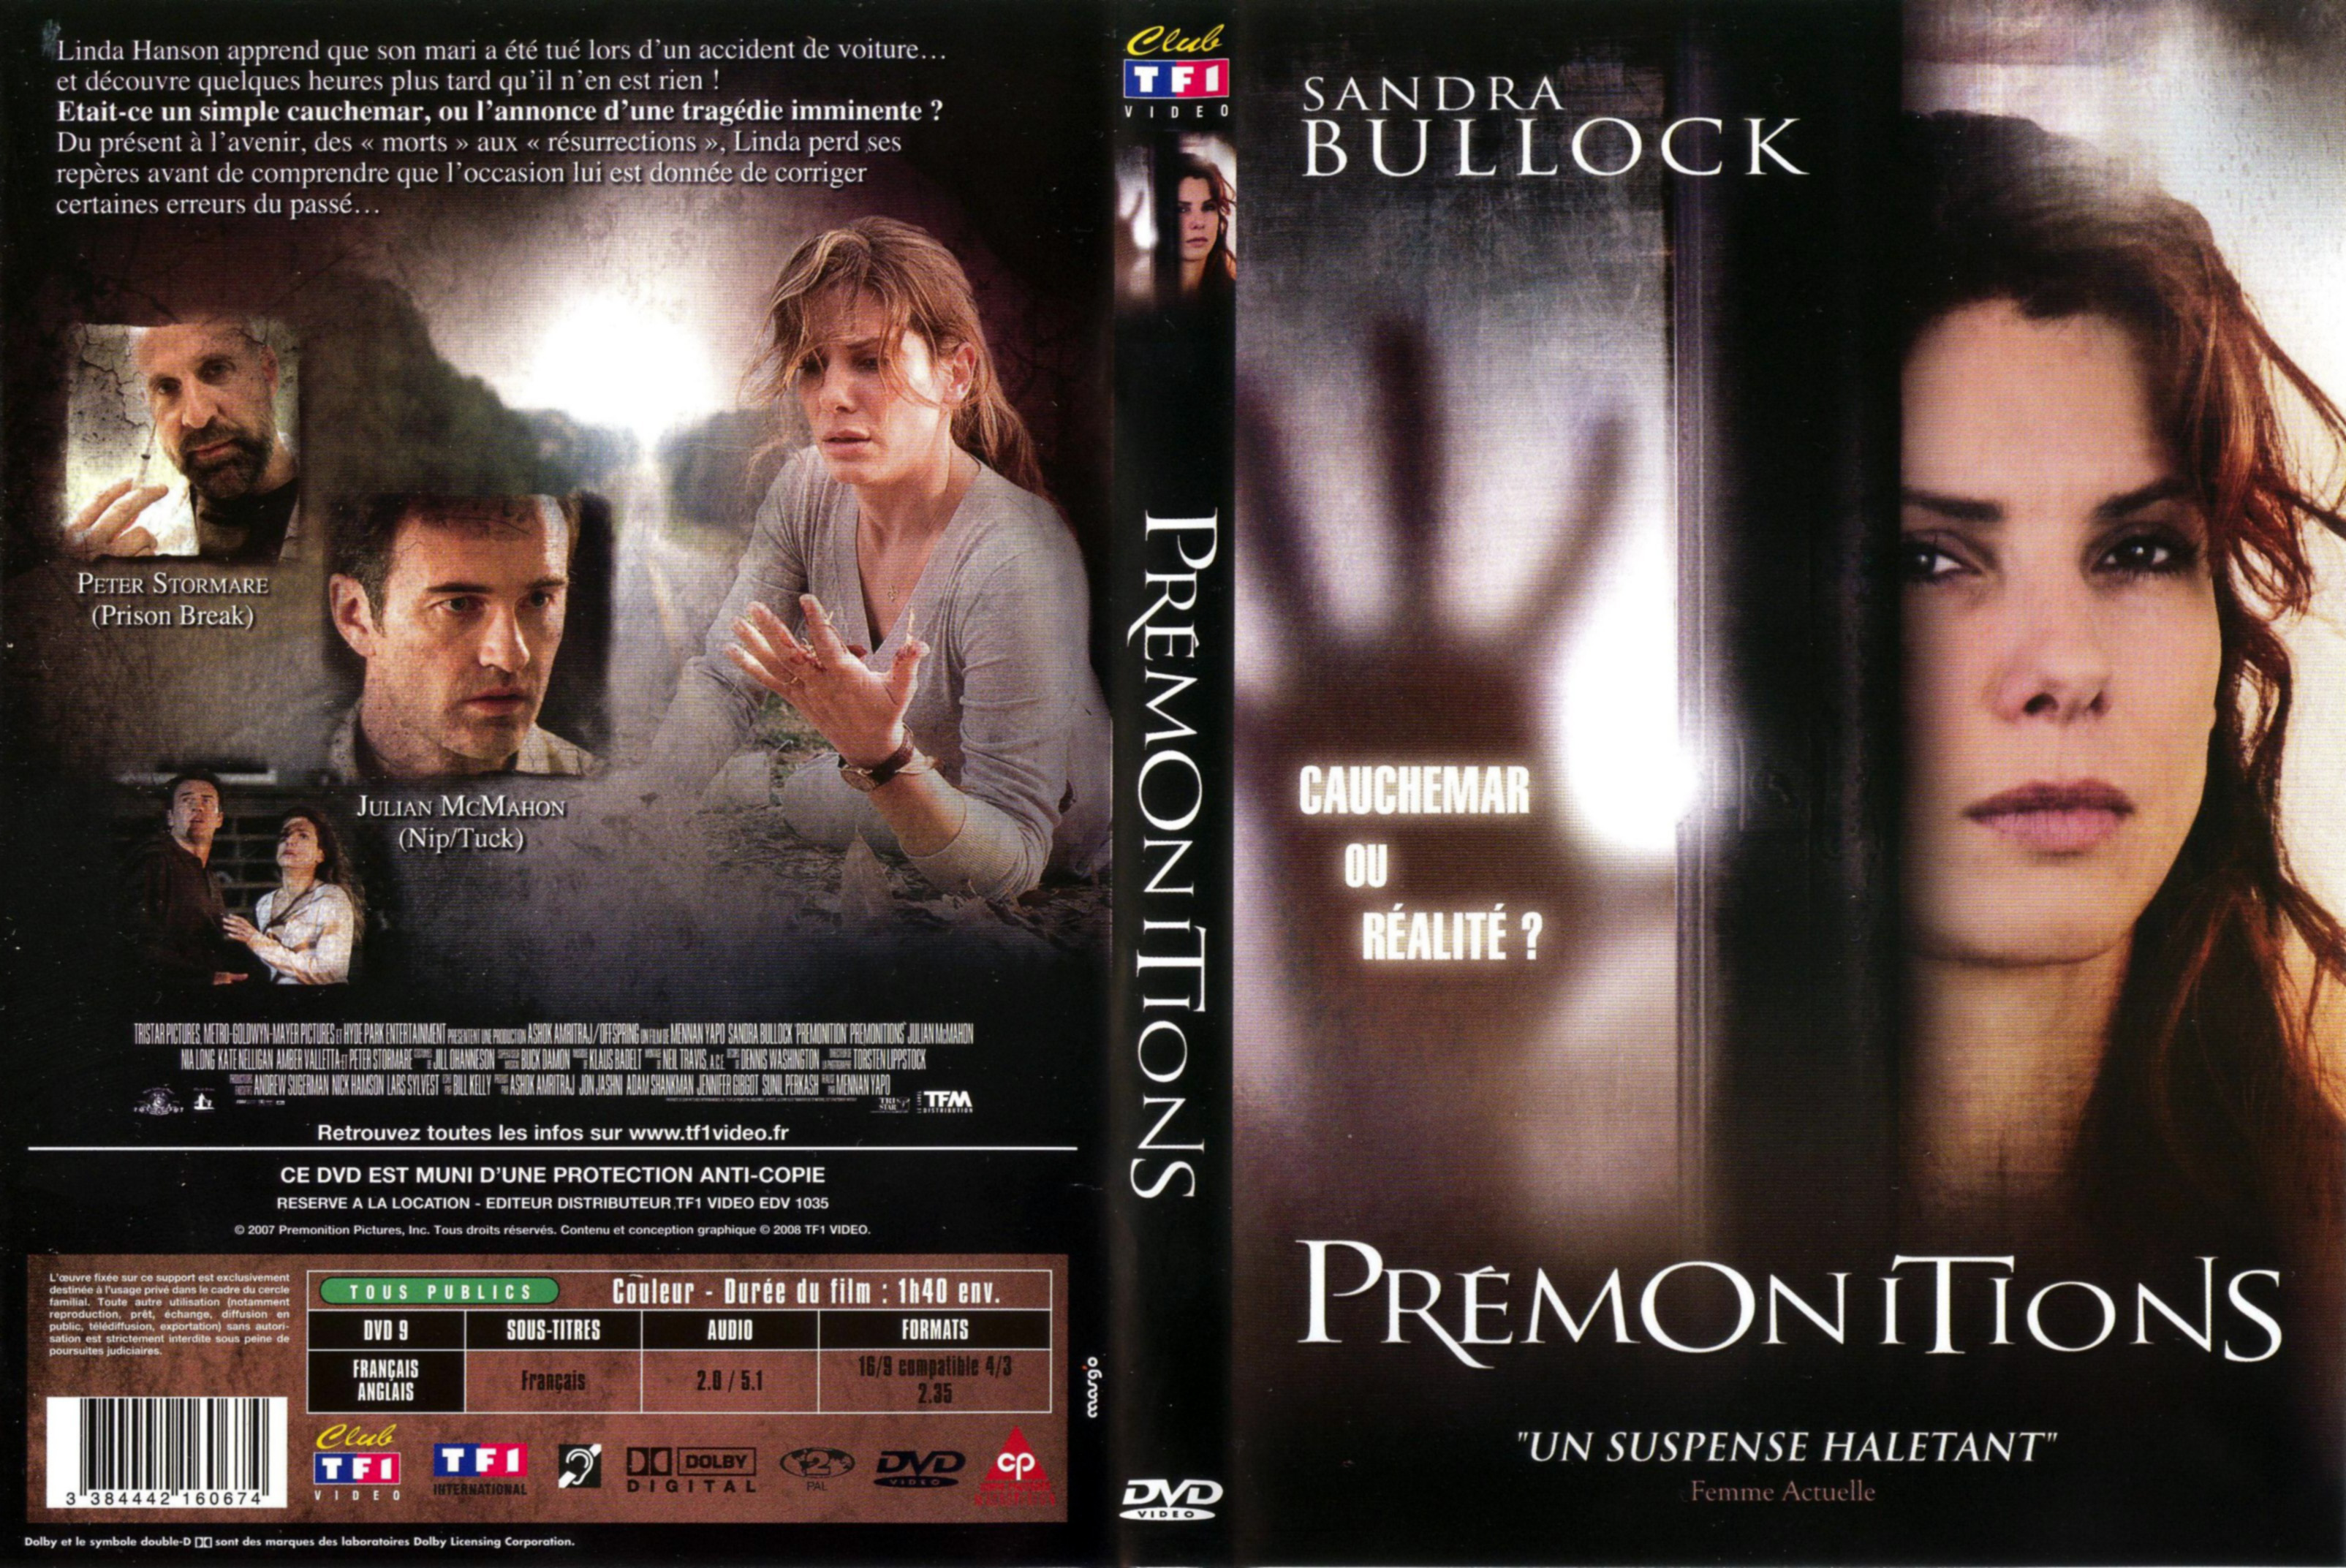 Jaquette DVD Prmonitions (Sandra Bullock)